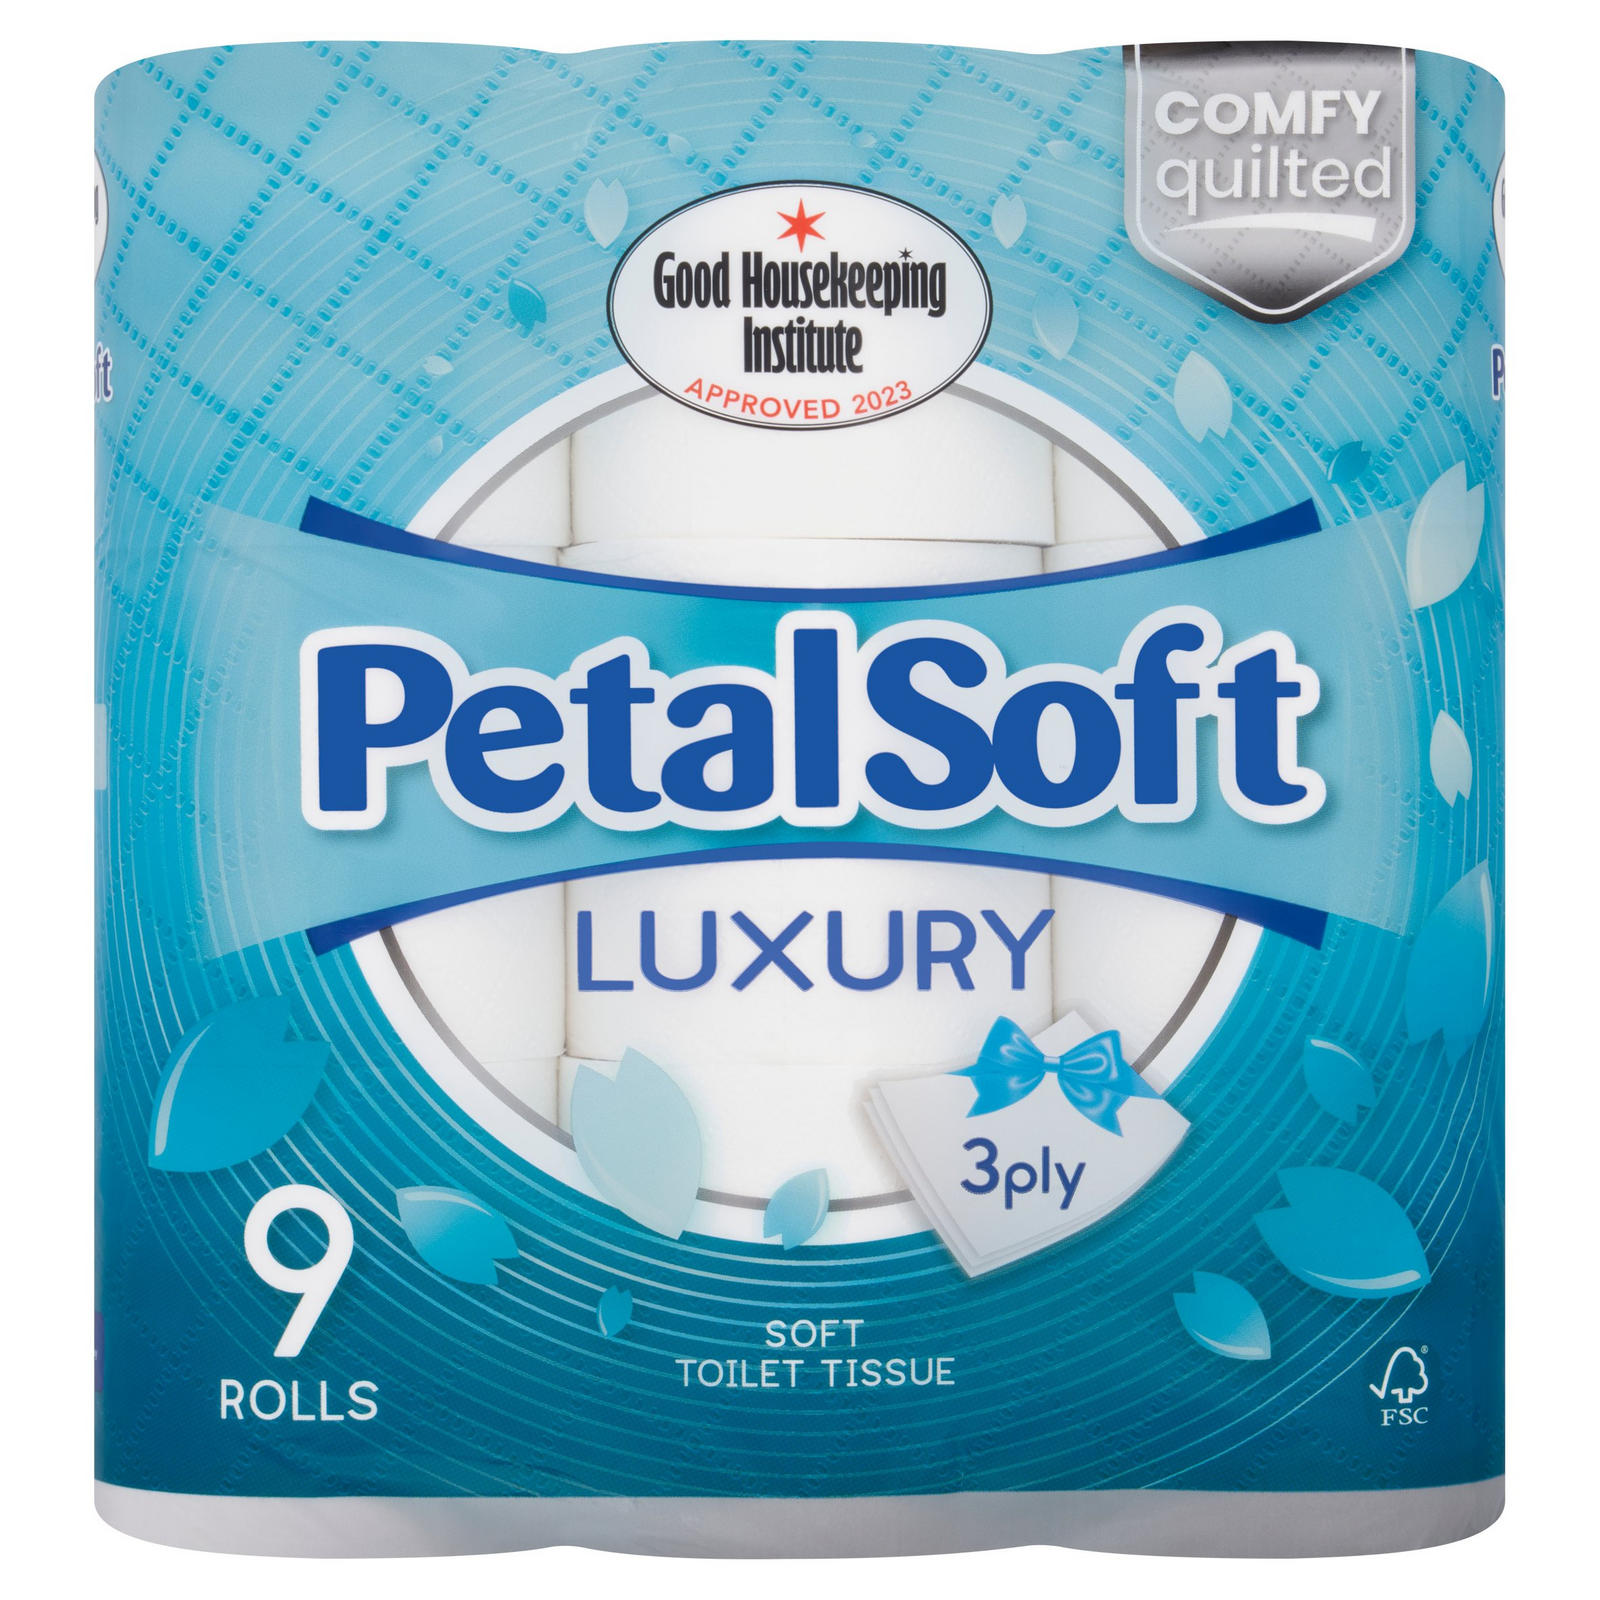 PetalSoft Luxury Soft Toilet Tissue 3 Ply 9 Rolls